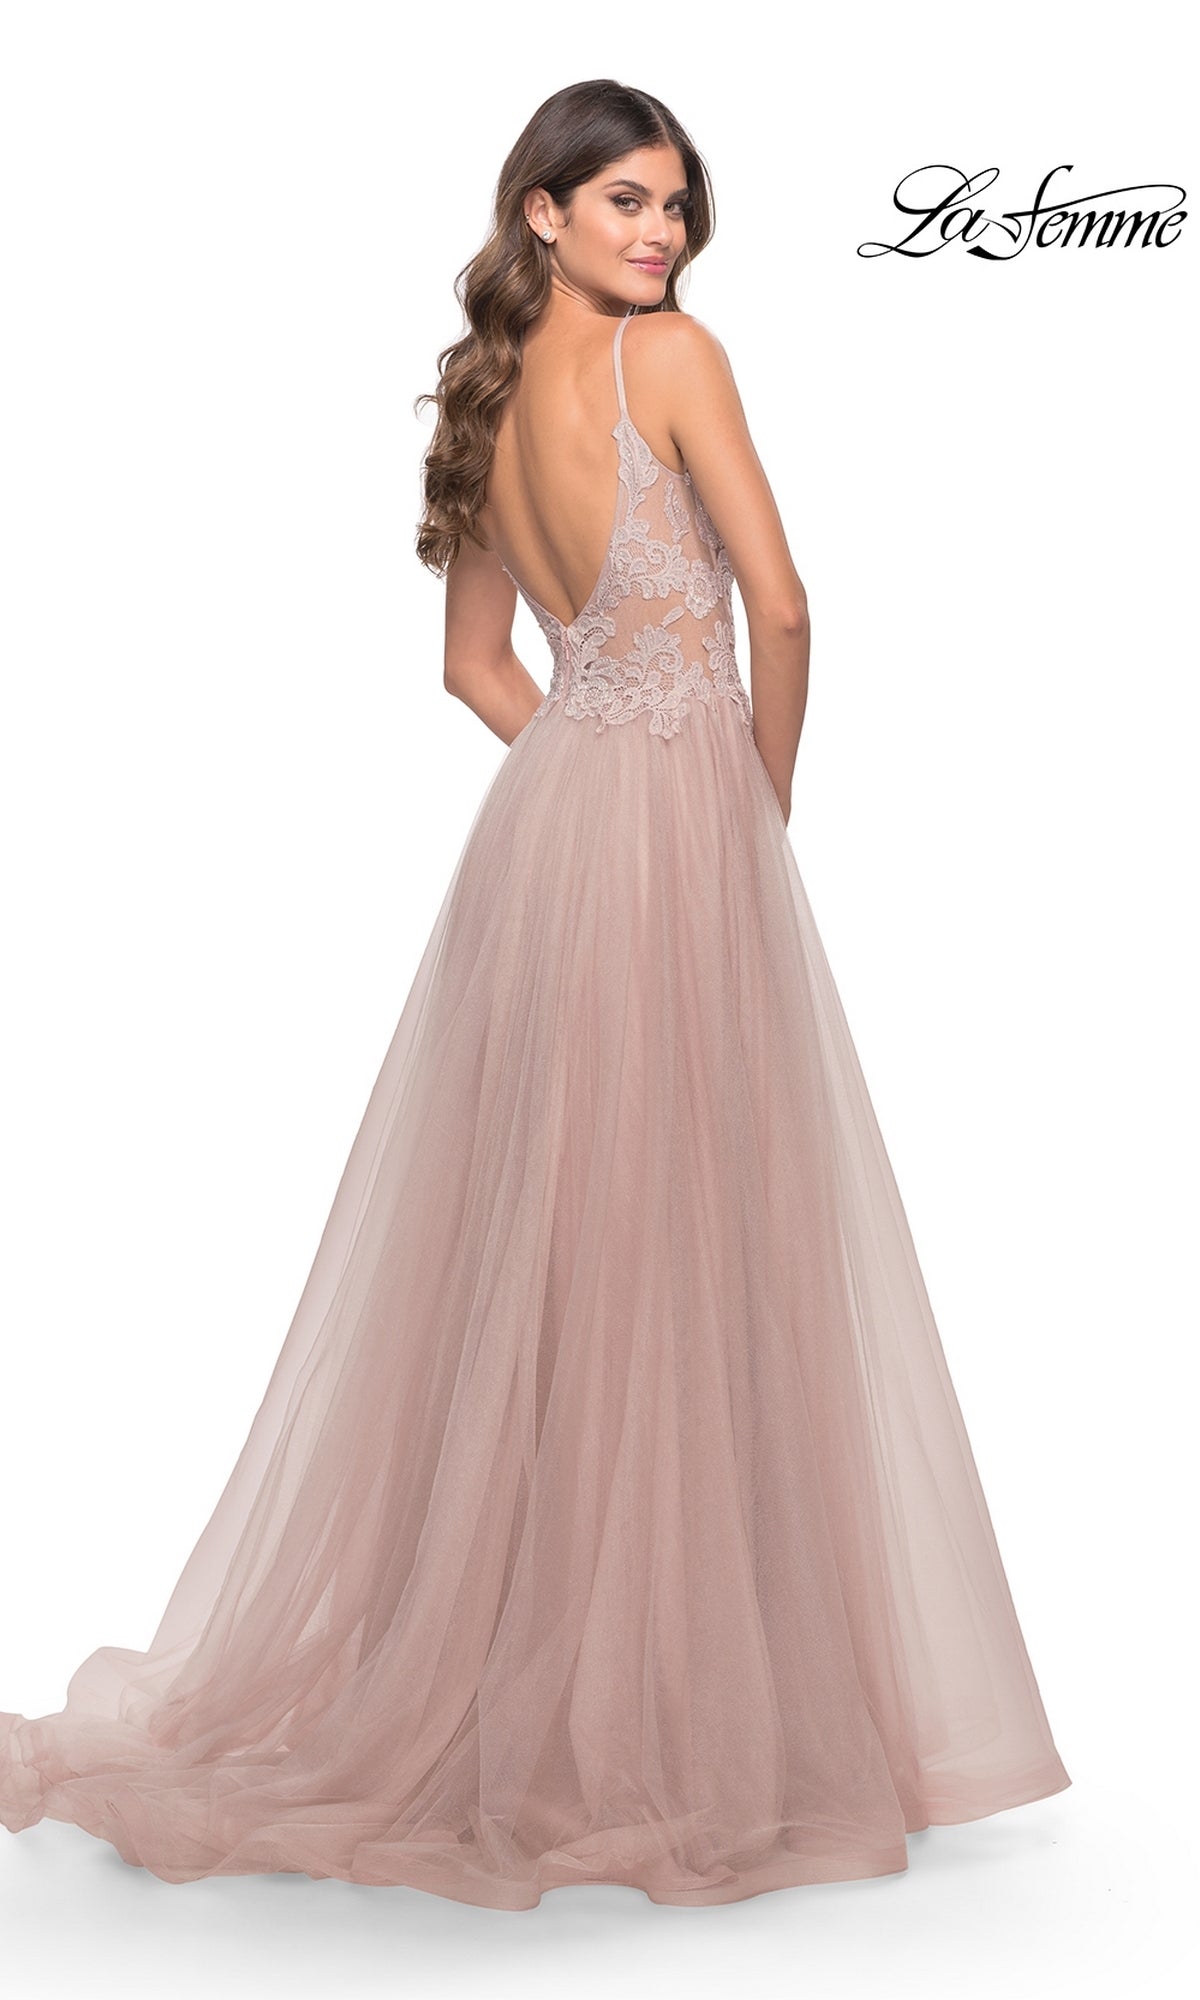  La Femme 31507 Formal Prom Dress